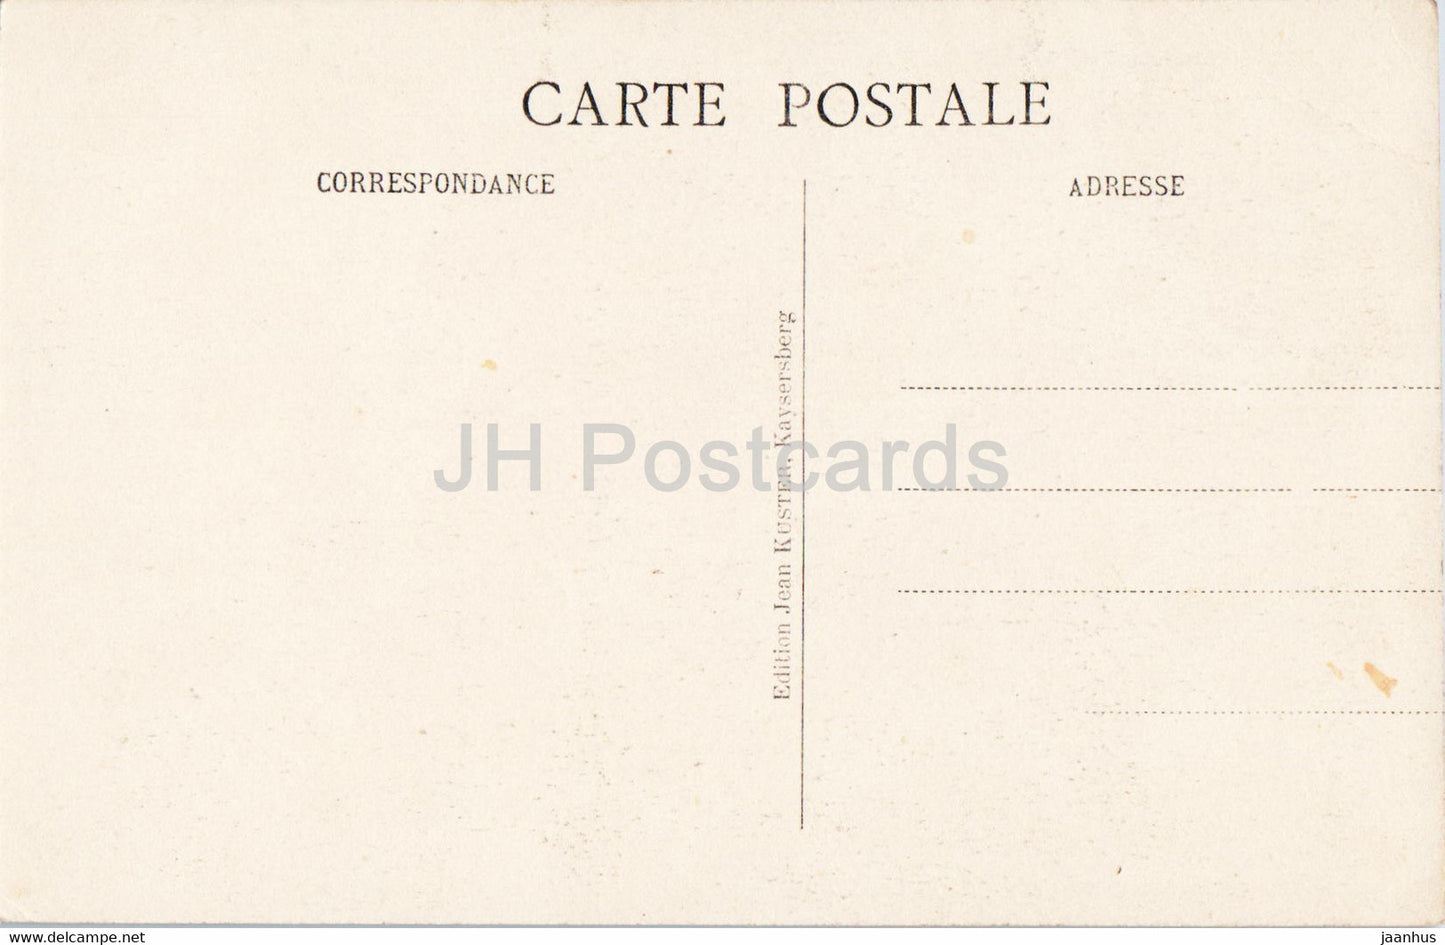 Le Miracle des Trois Epis - alte Postkarte - Frankreich - unbenutzt